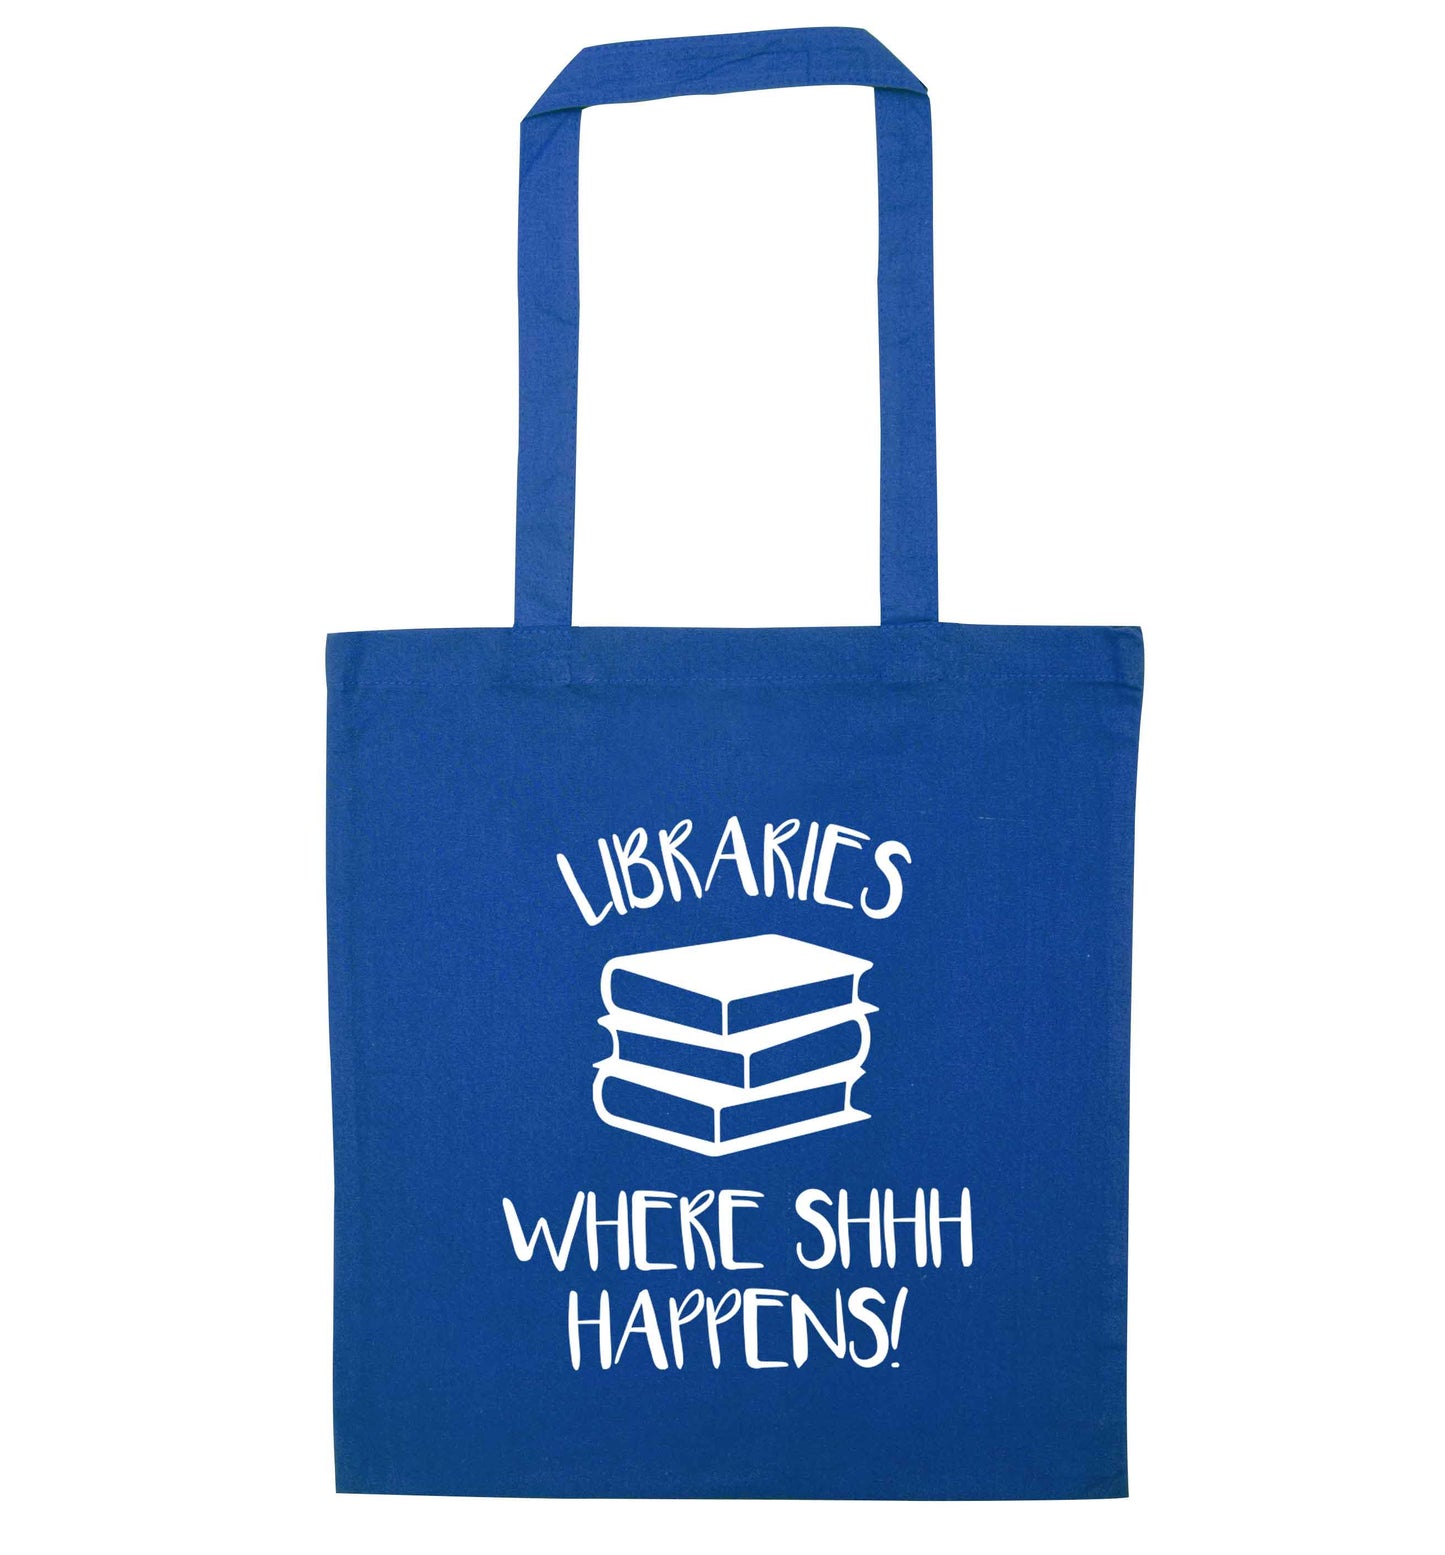 Libraries where shh happens! blue tote bag